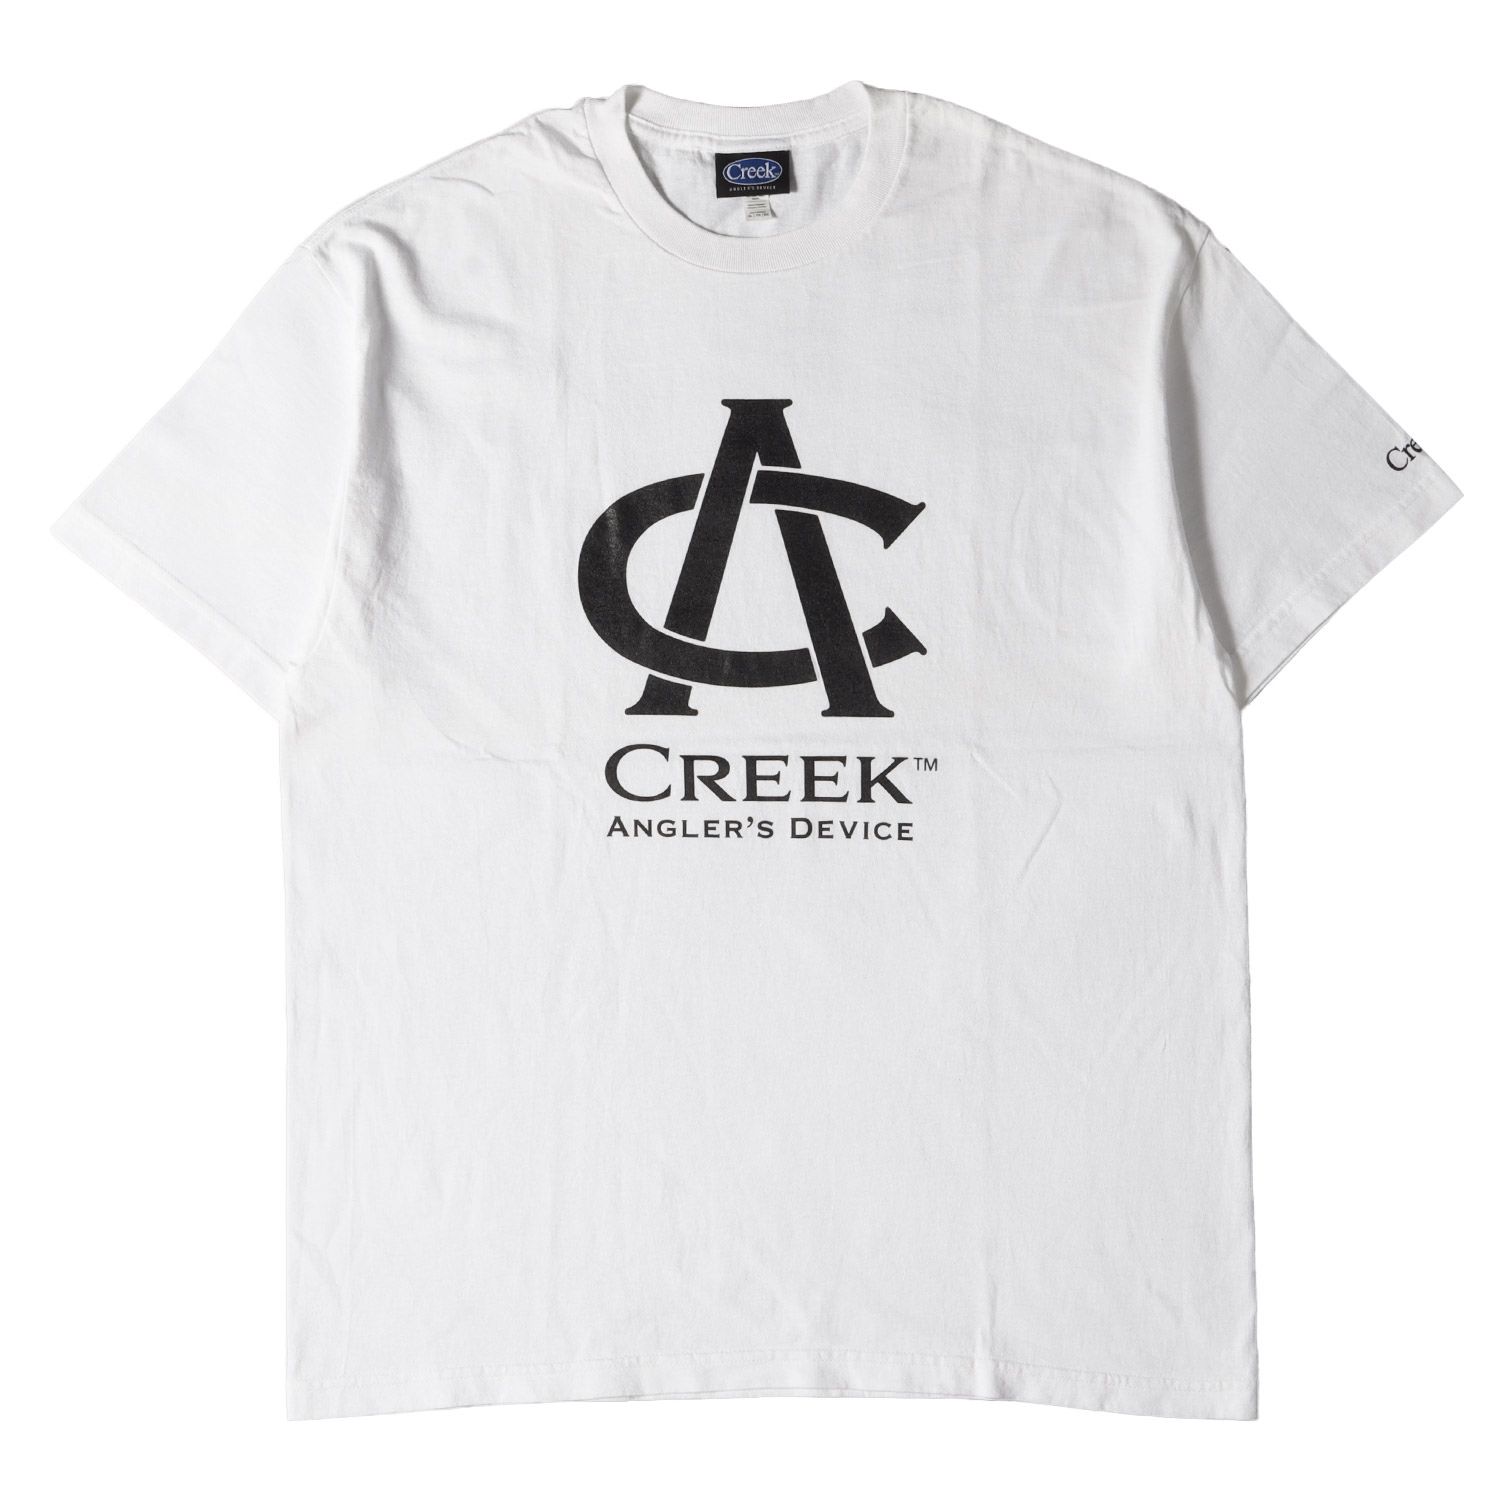 Creek Anglers Device クリークアングラーズデバイス Tシャツ ブランド ...